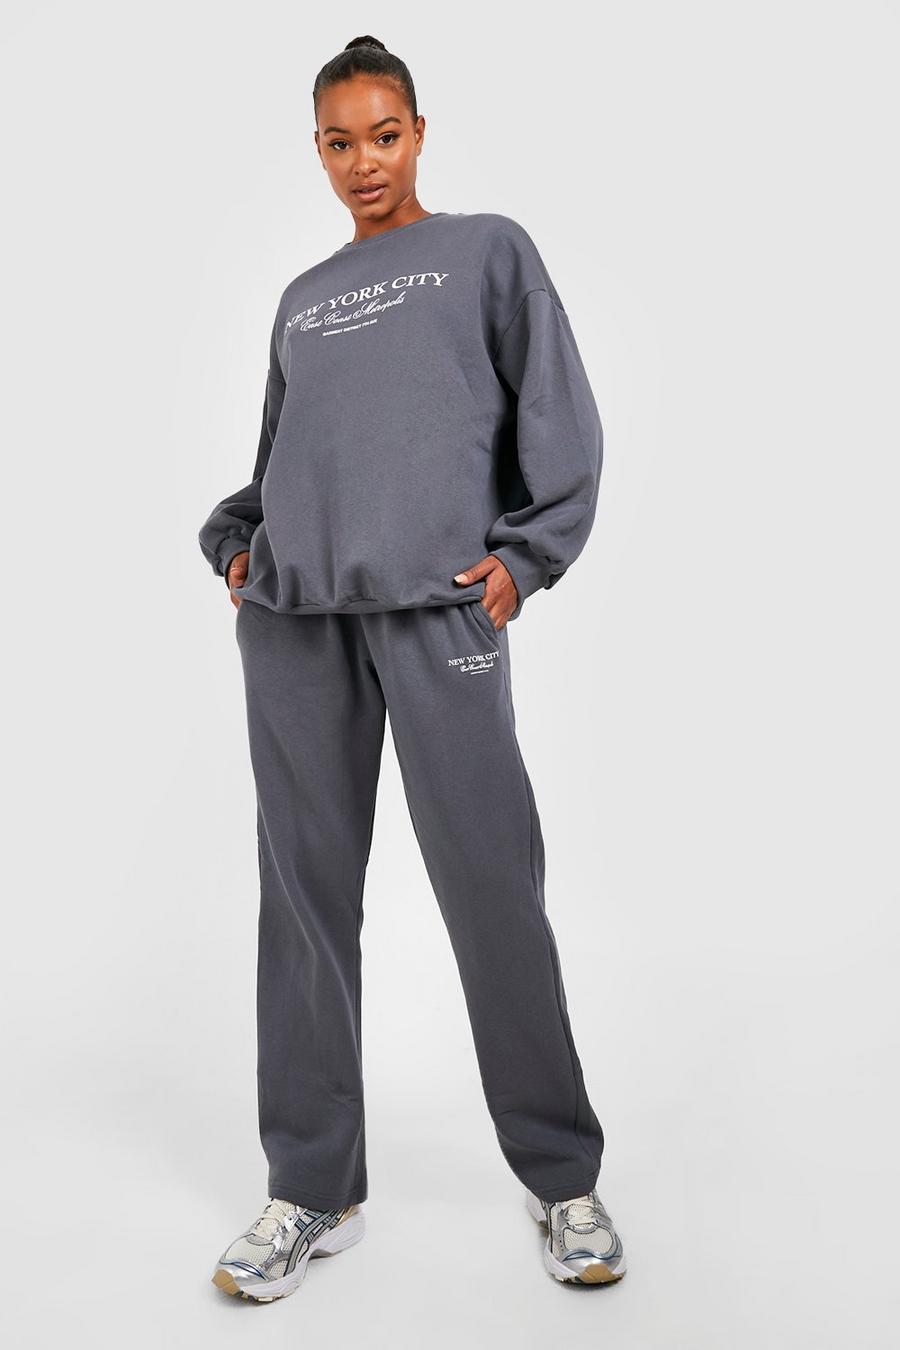 Charcoal grey Tall New York Printed Sweatshirt Tracksuit